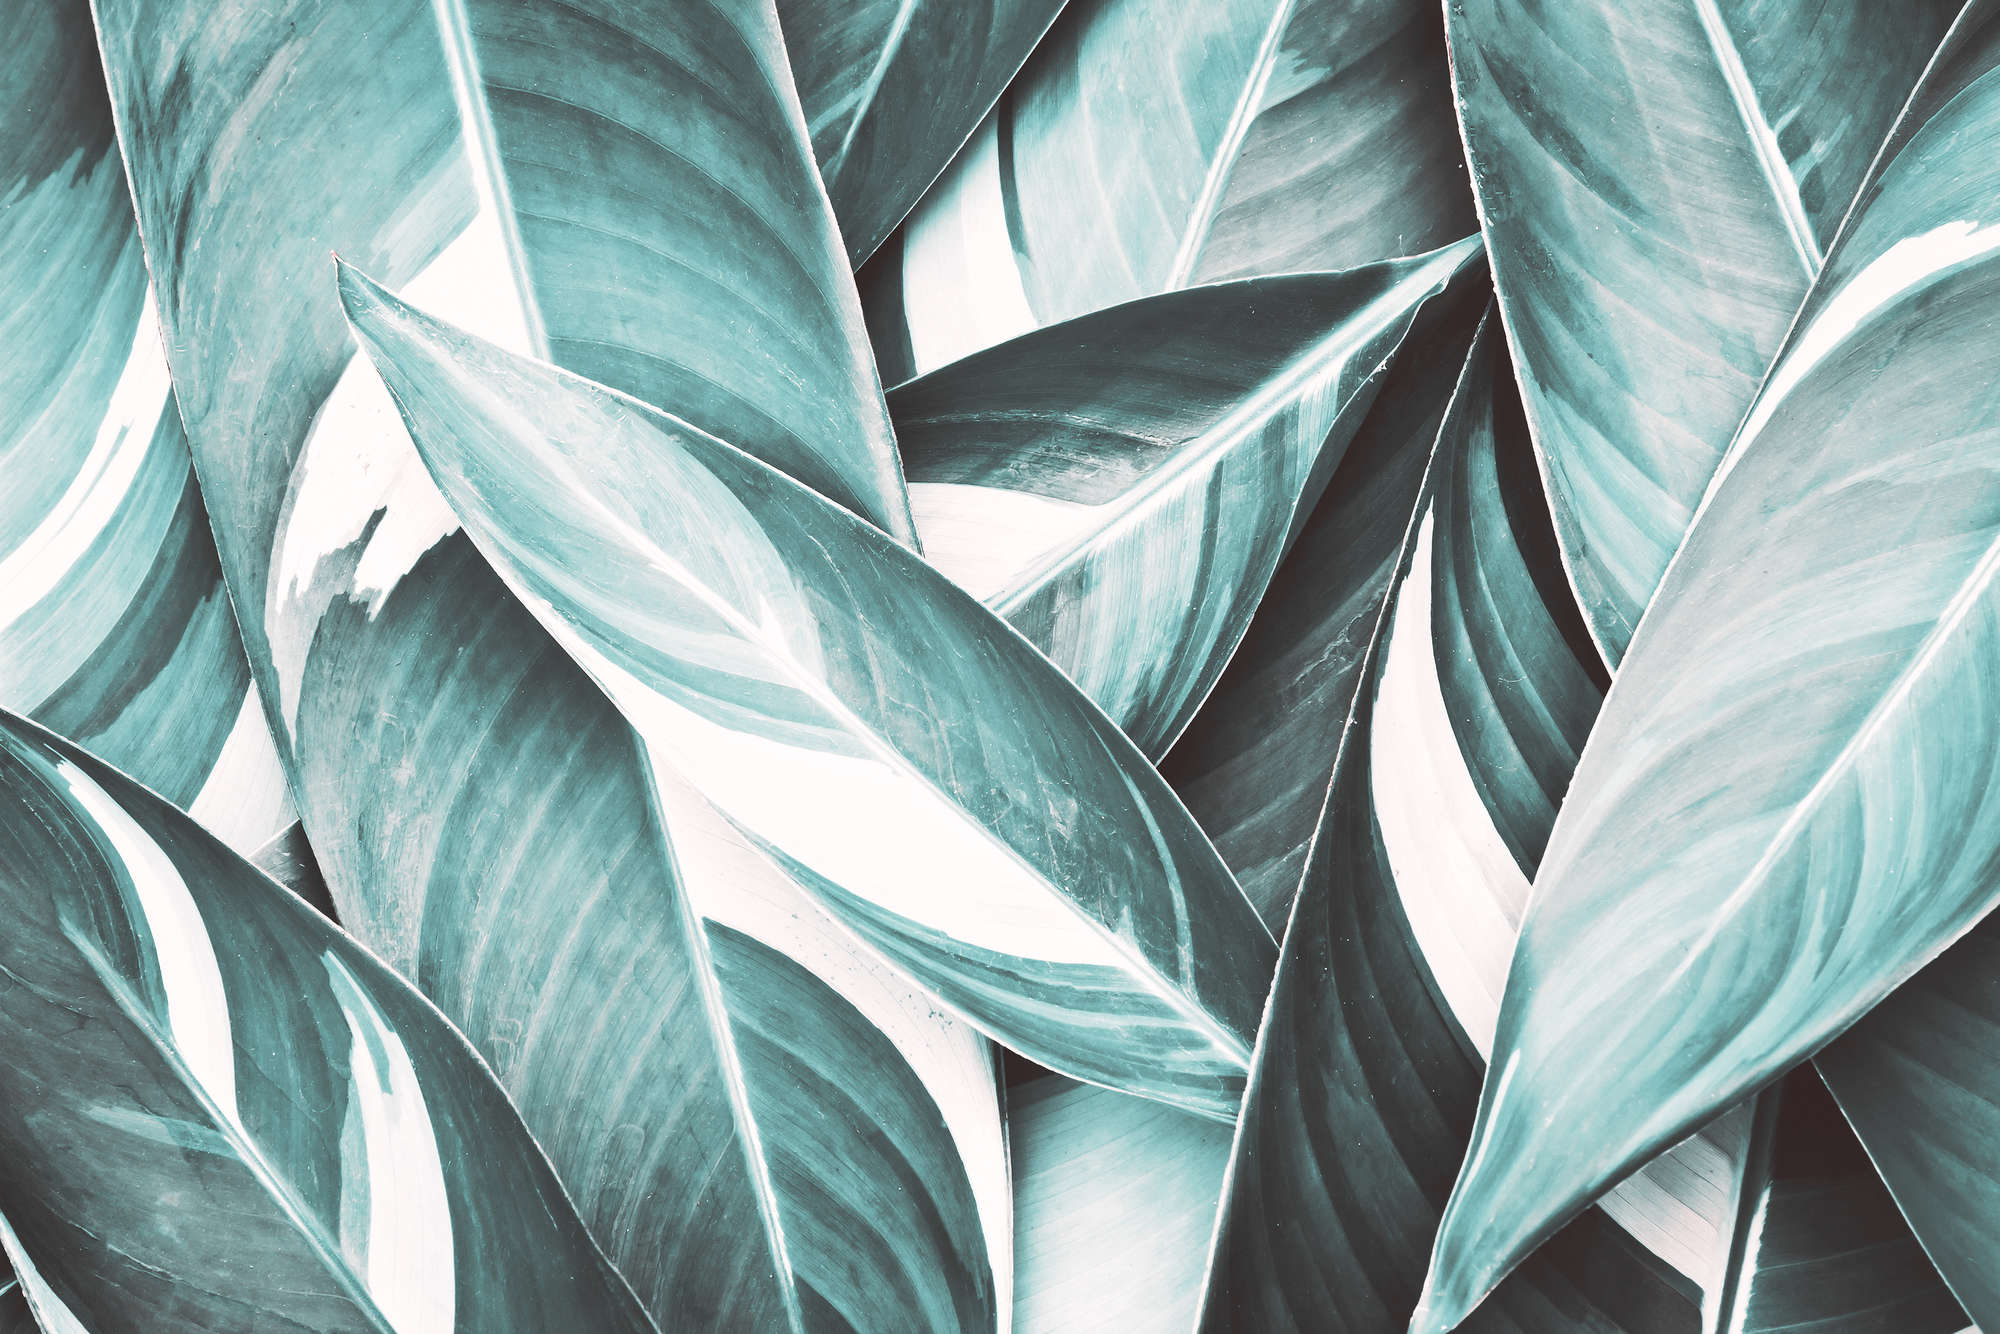             Nature Behang Palm Leaves Motief Grijs op Premium Smooth Nonwoven
        